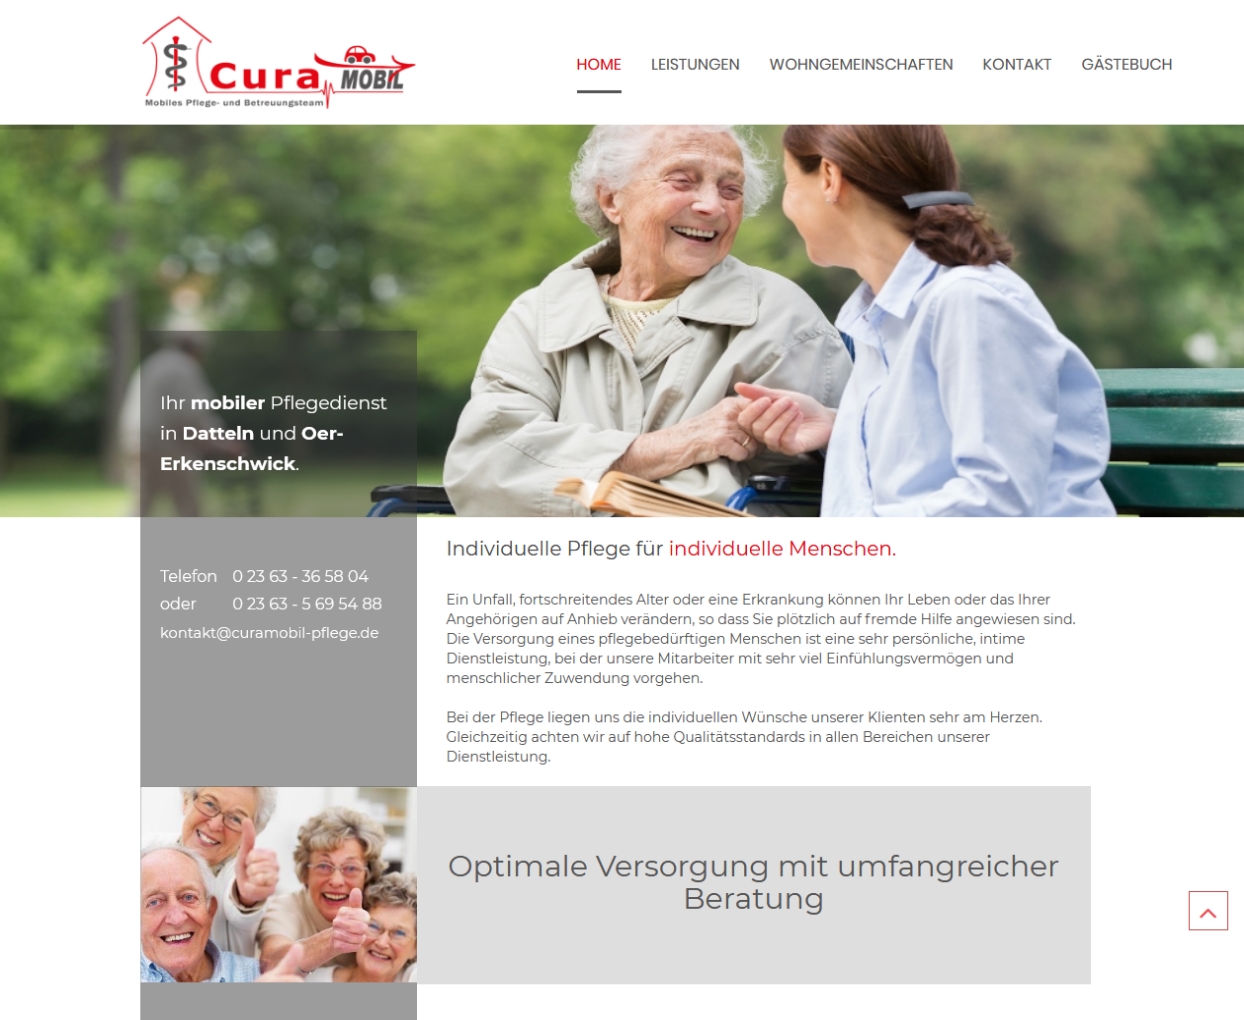 Cura Mobil GmbH Mobiler Pflegedienst